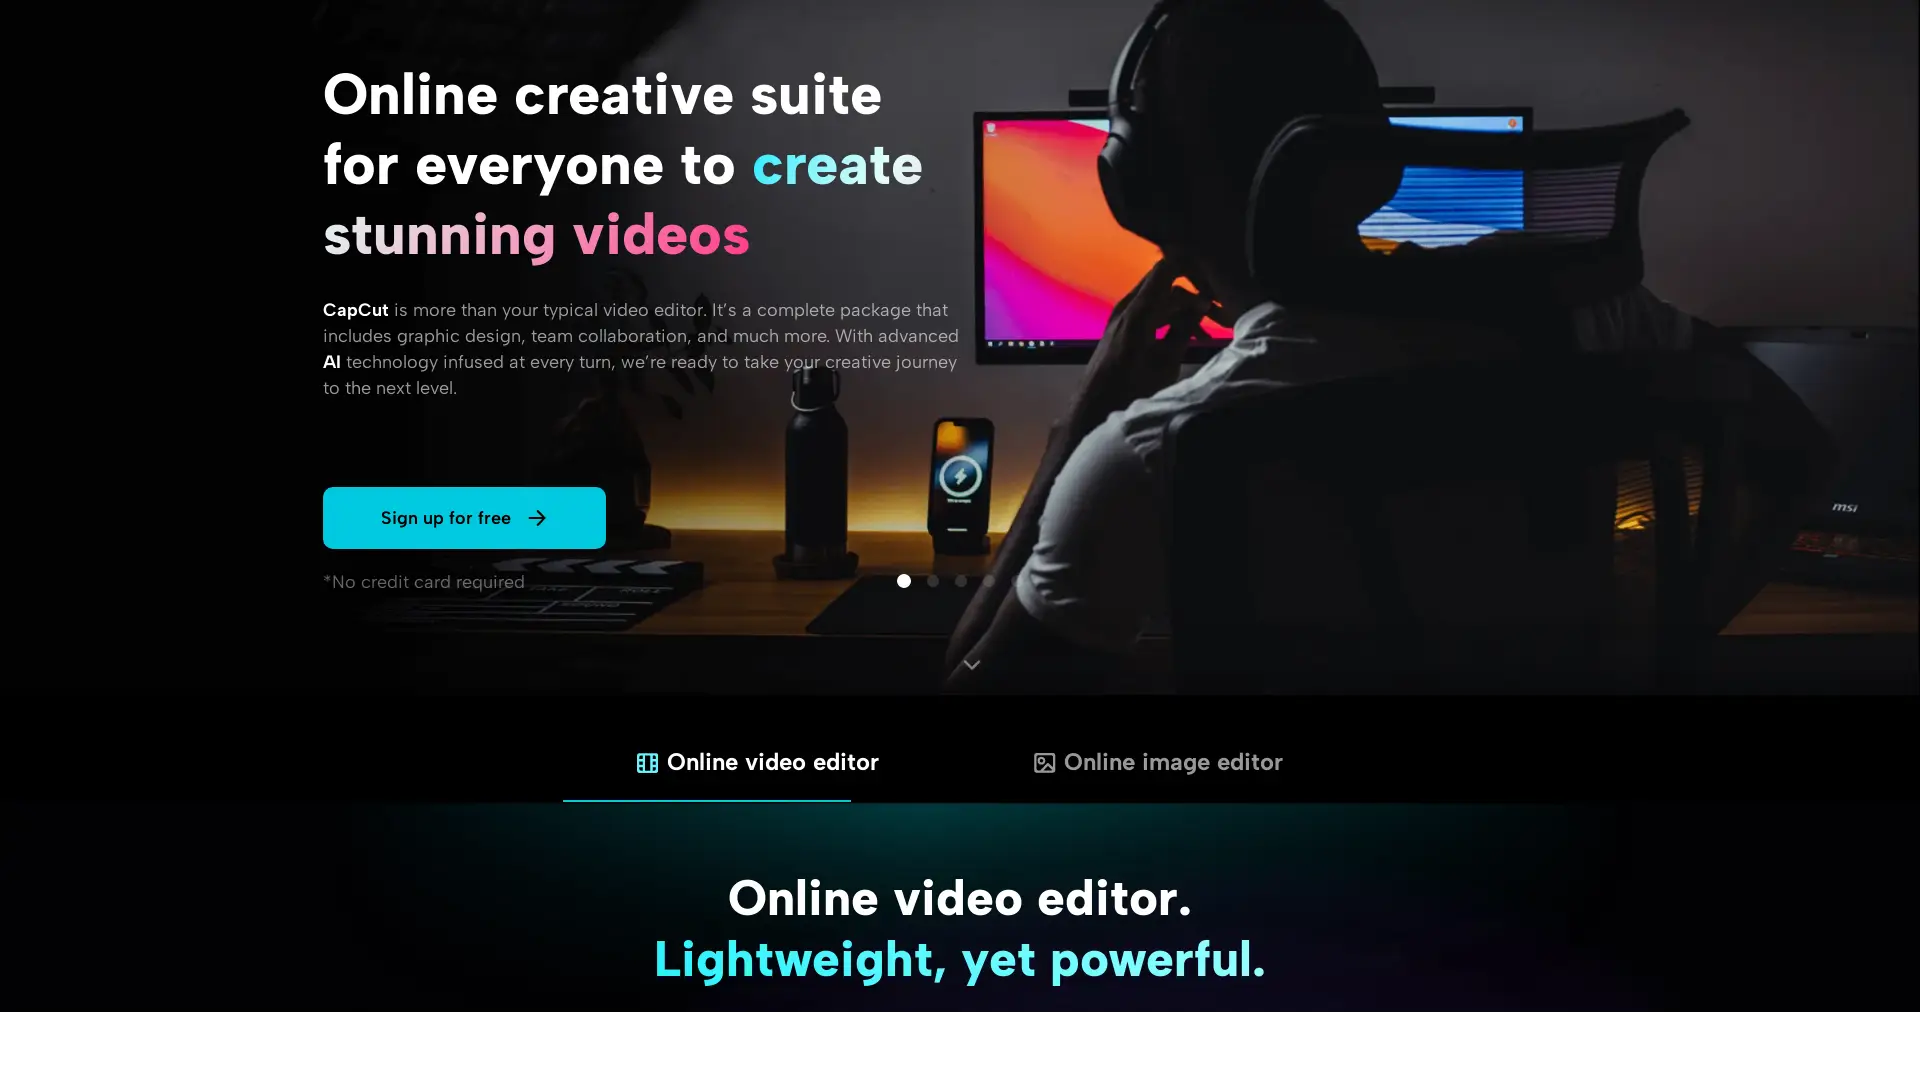 CapCut Online Creative Suite